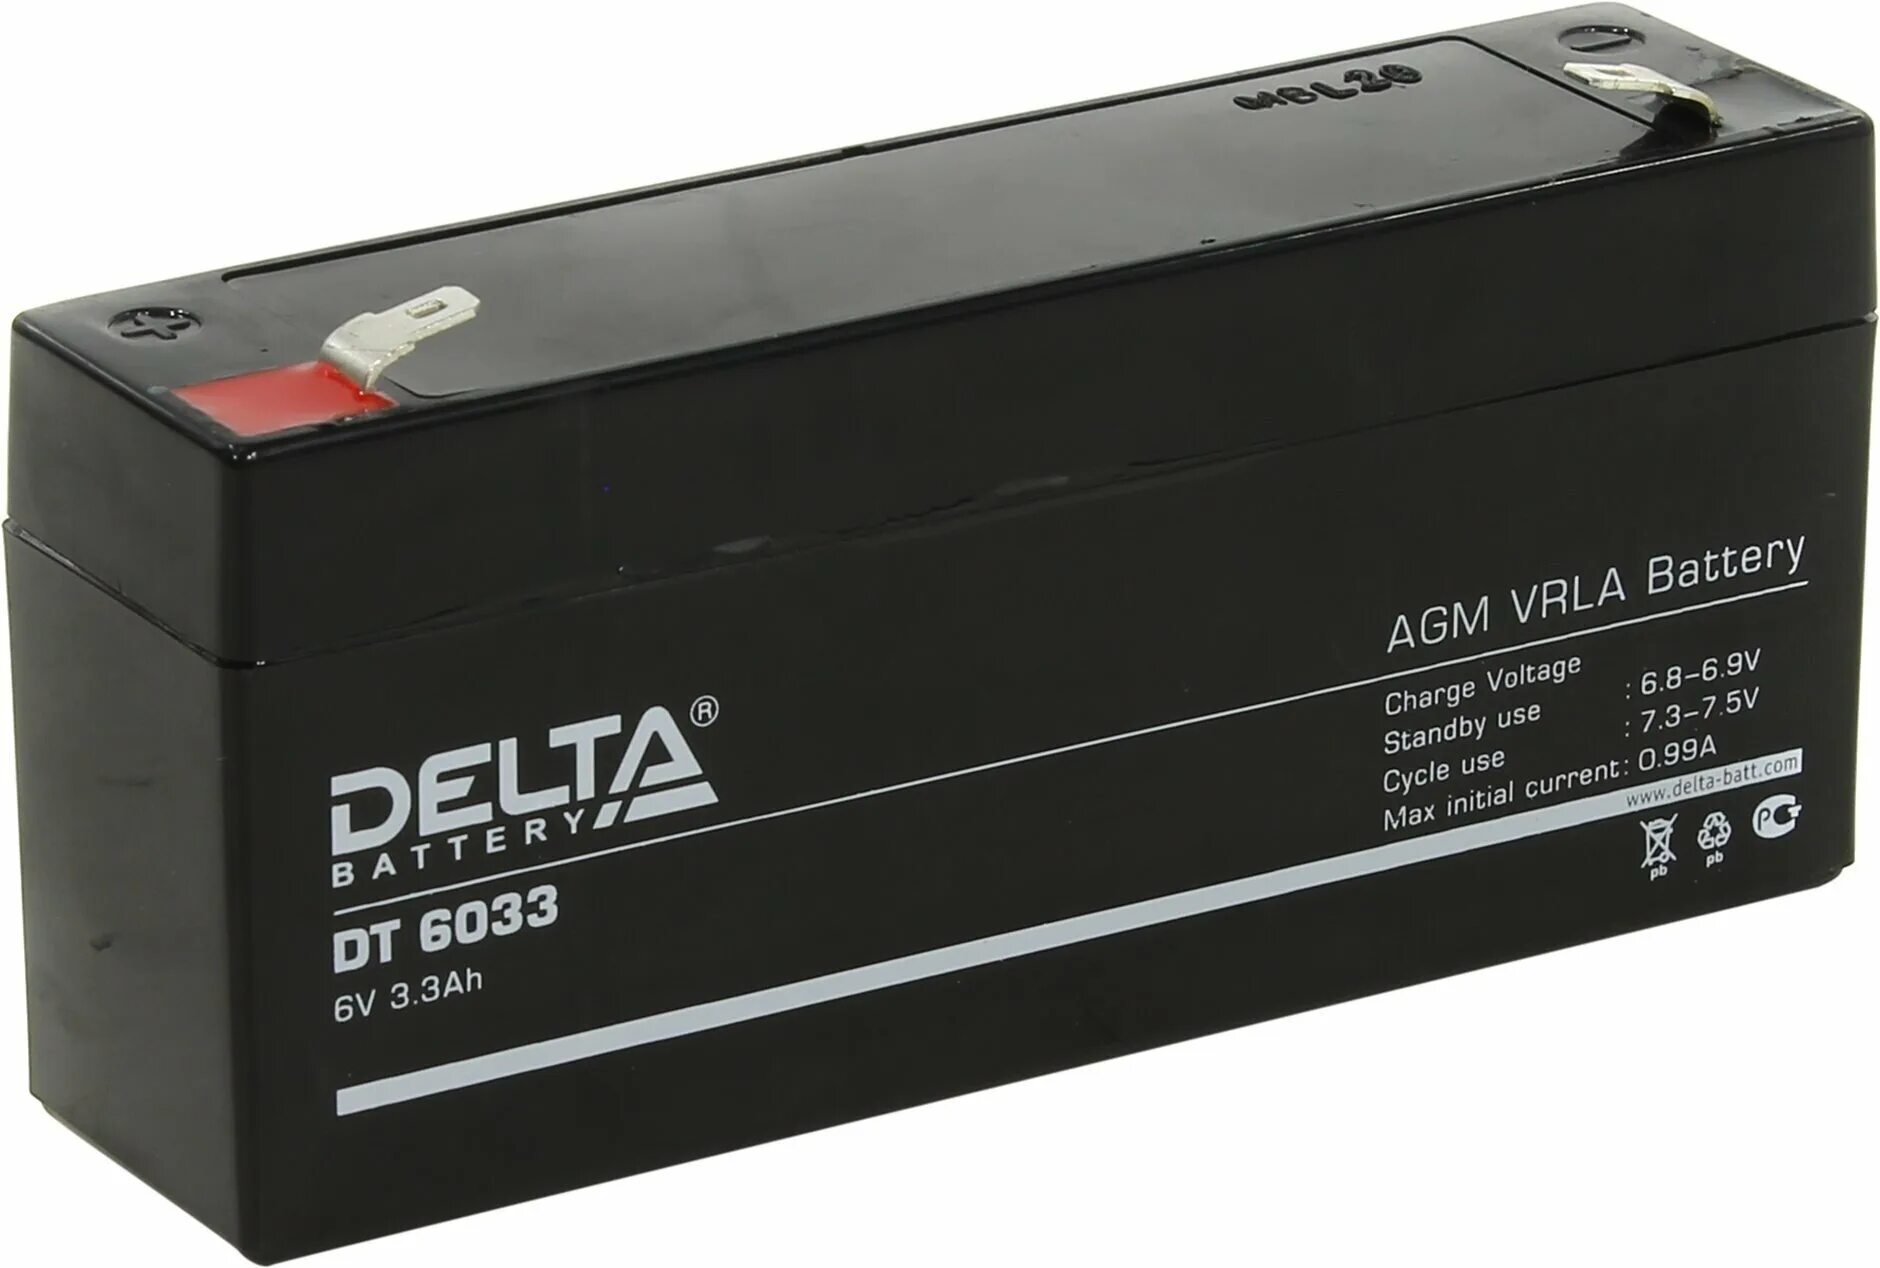 Встроенные аккумуляторы батареи. Батарея аккумуляторная 6v / 3.3Ah Delta DT 6033. Delta DT 4045 (47 мм). Delta DT 12200. Аккумулятор 6v/1.3Ah (Delta DT 6012) (Элвес МФ).